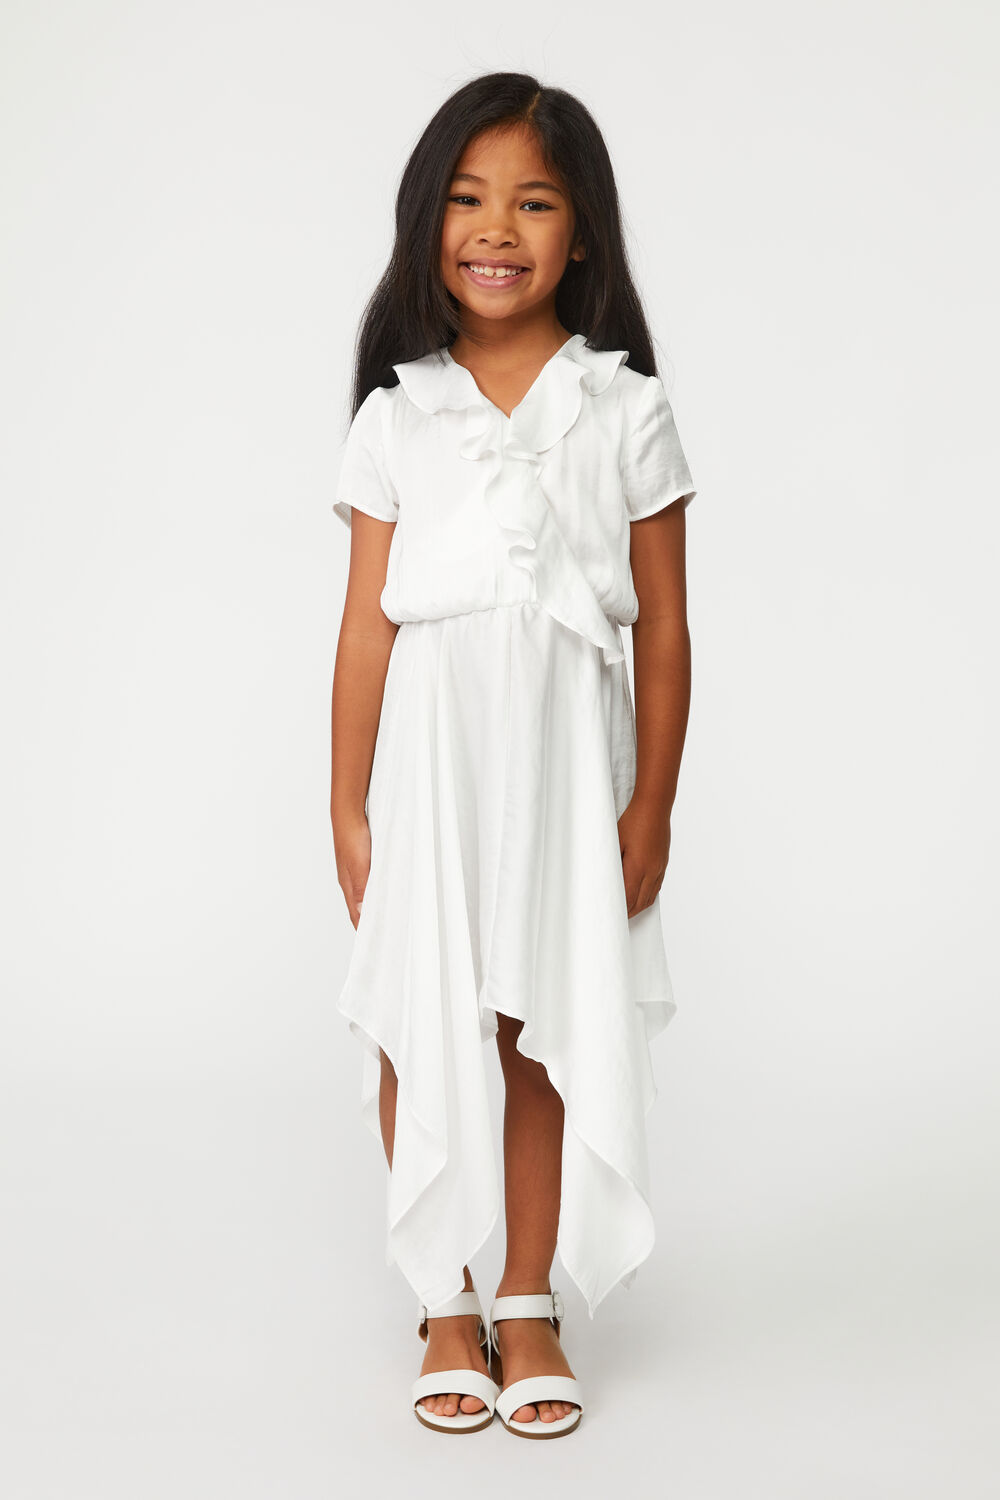 GIRLS CARTER HANKY DRESS in colour BRIGHT WHITE